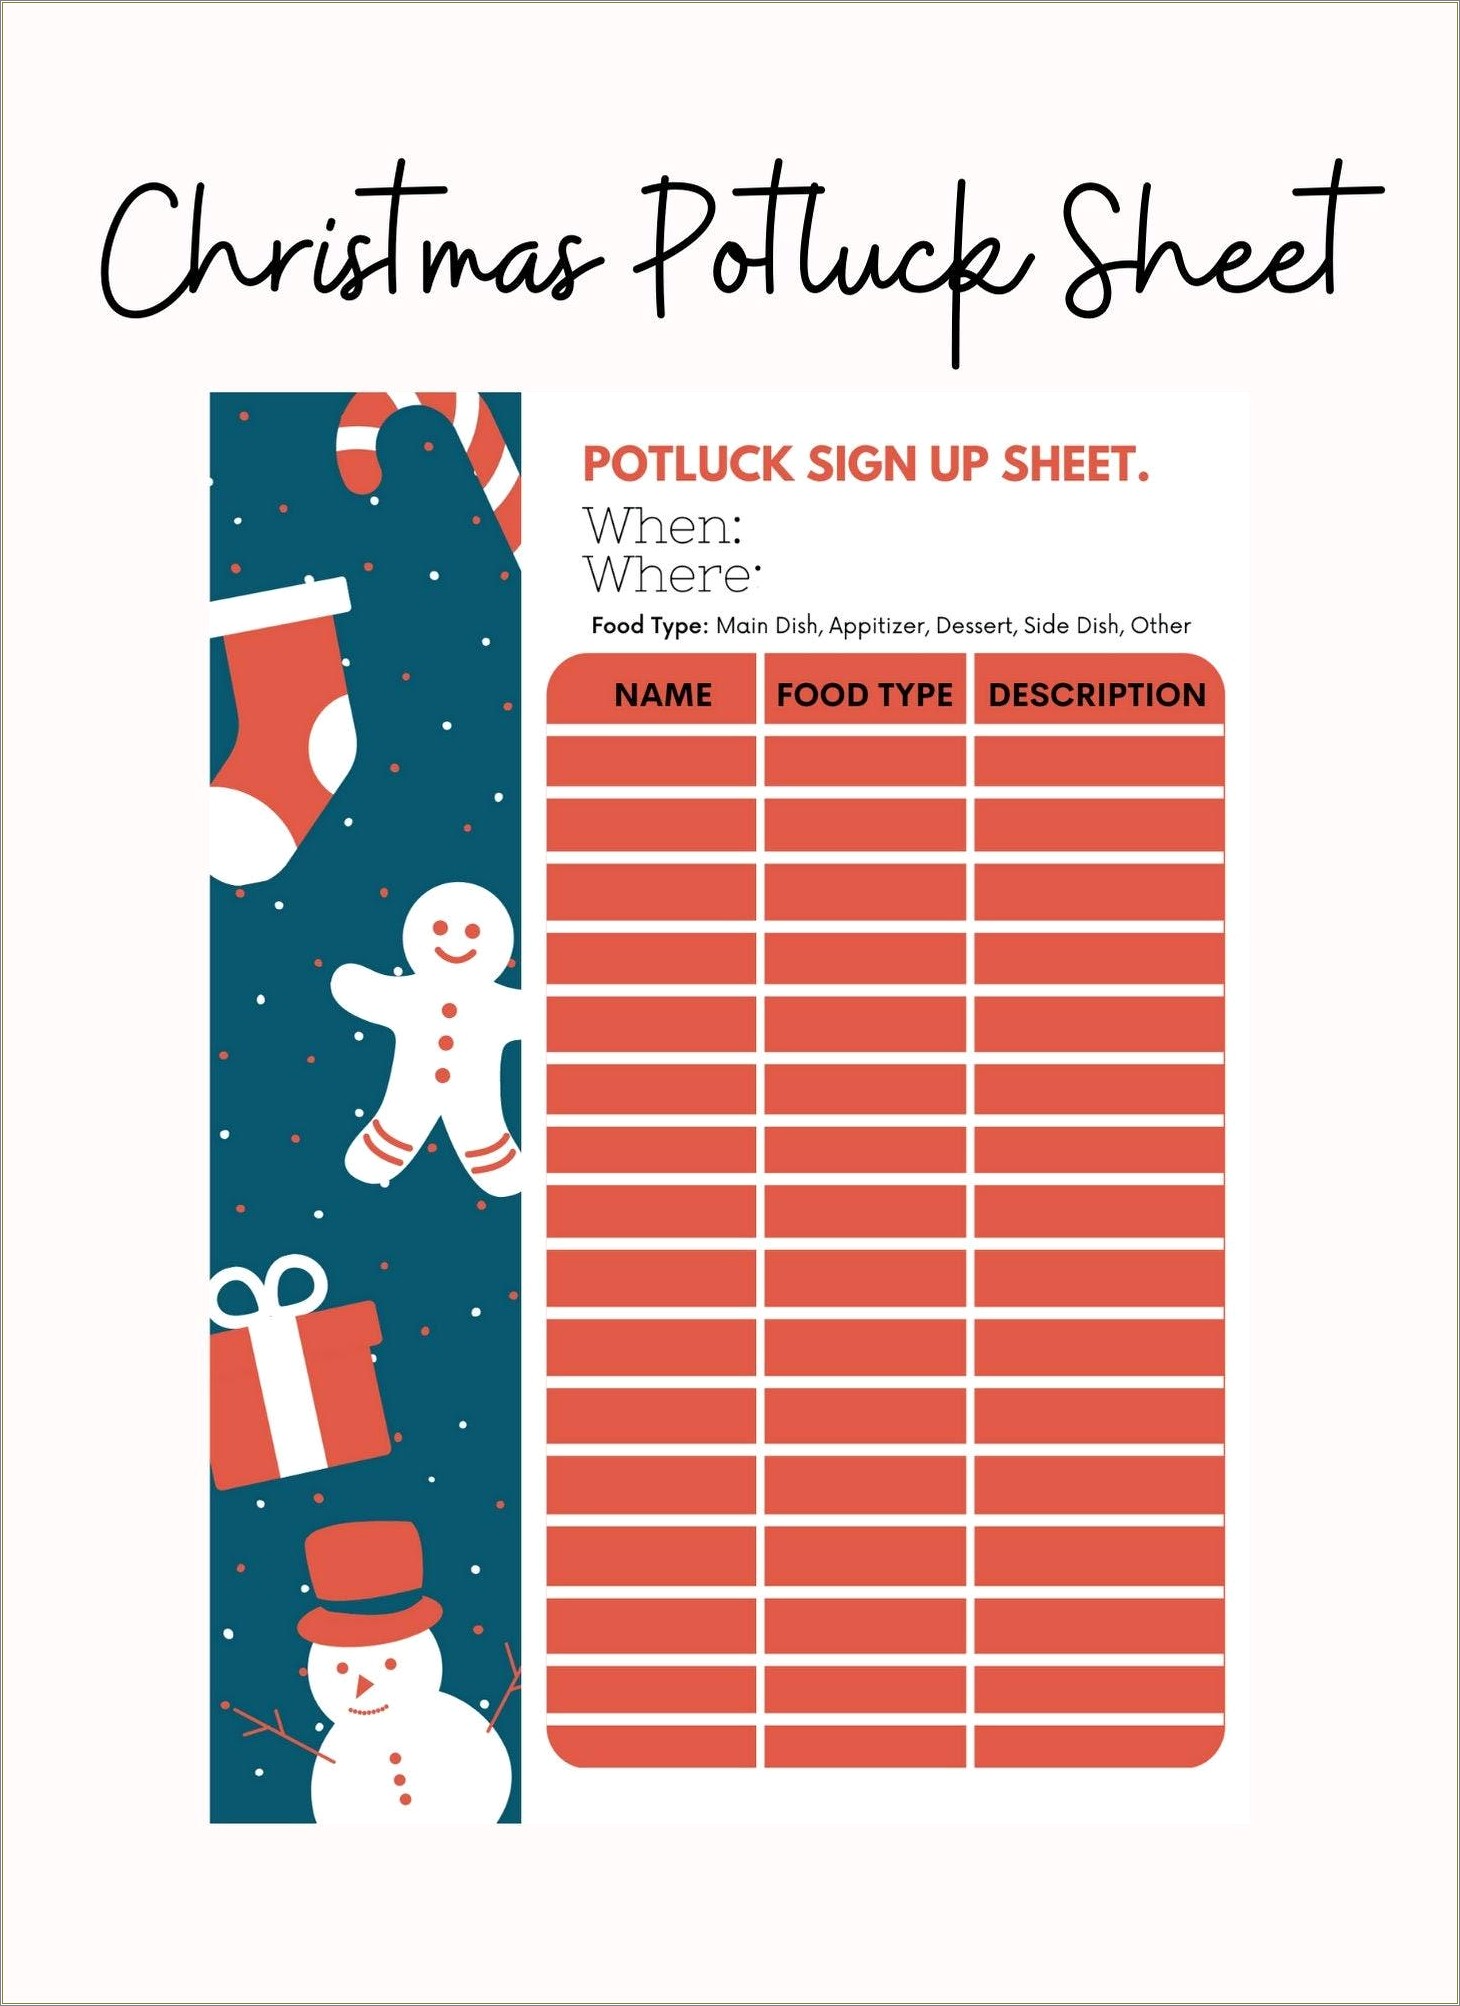 Christmas Potluck Signup Sheet Template Free